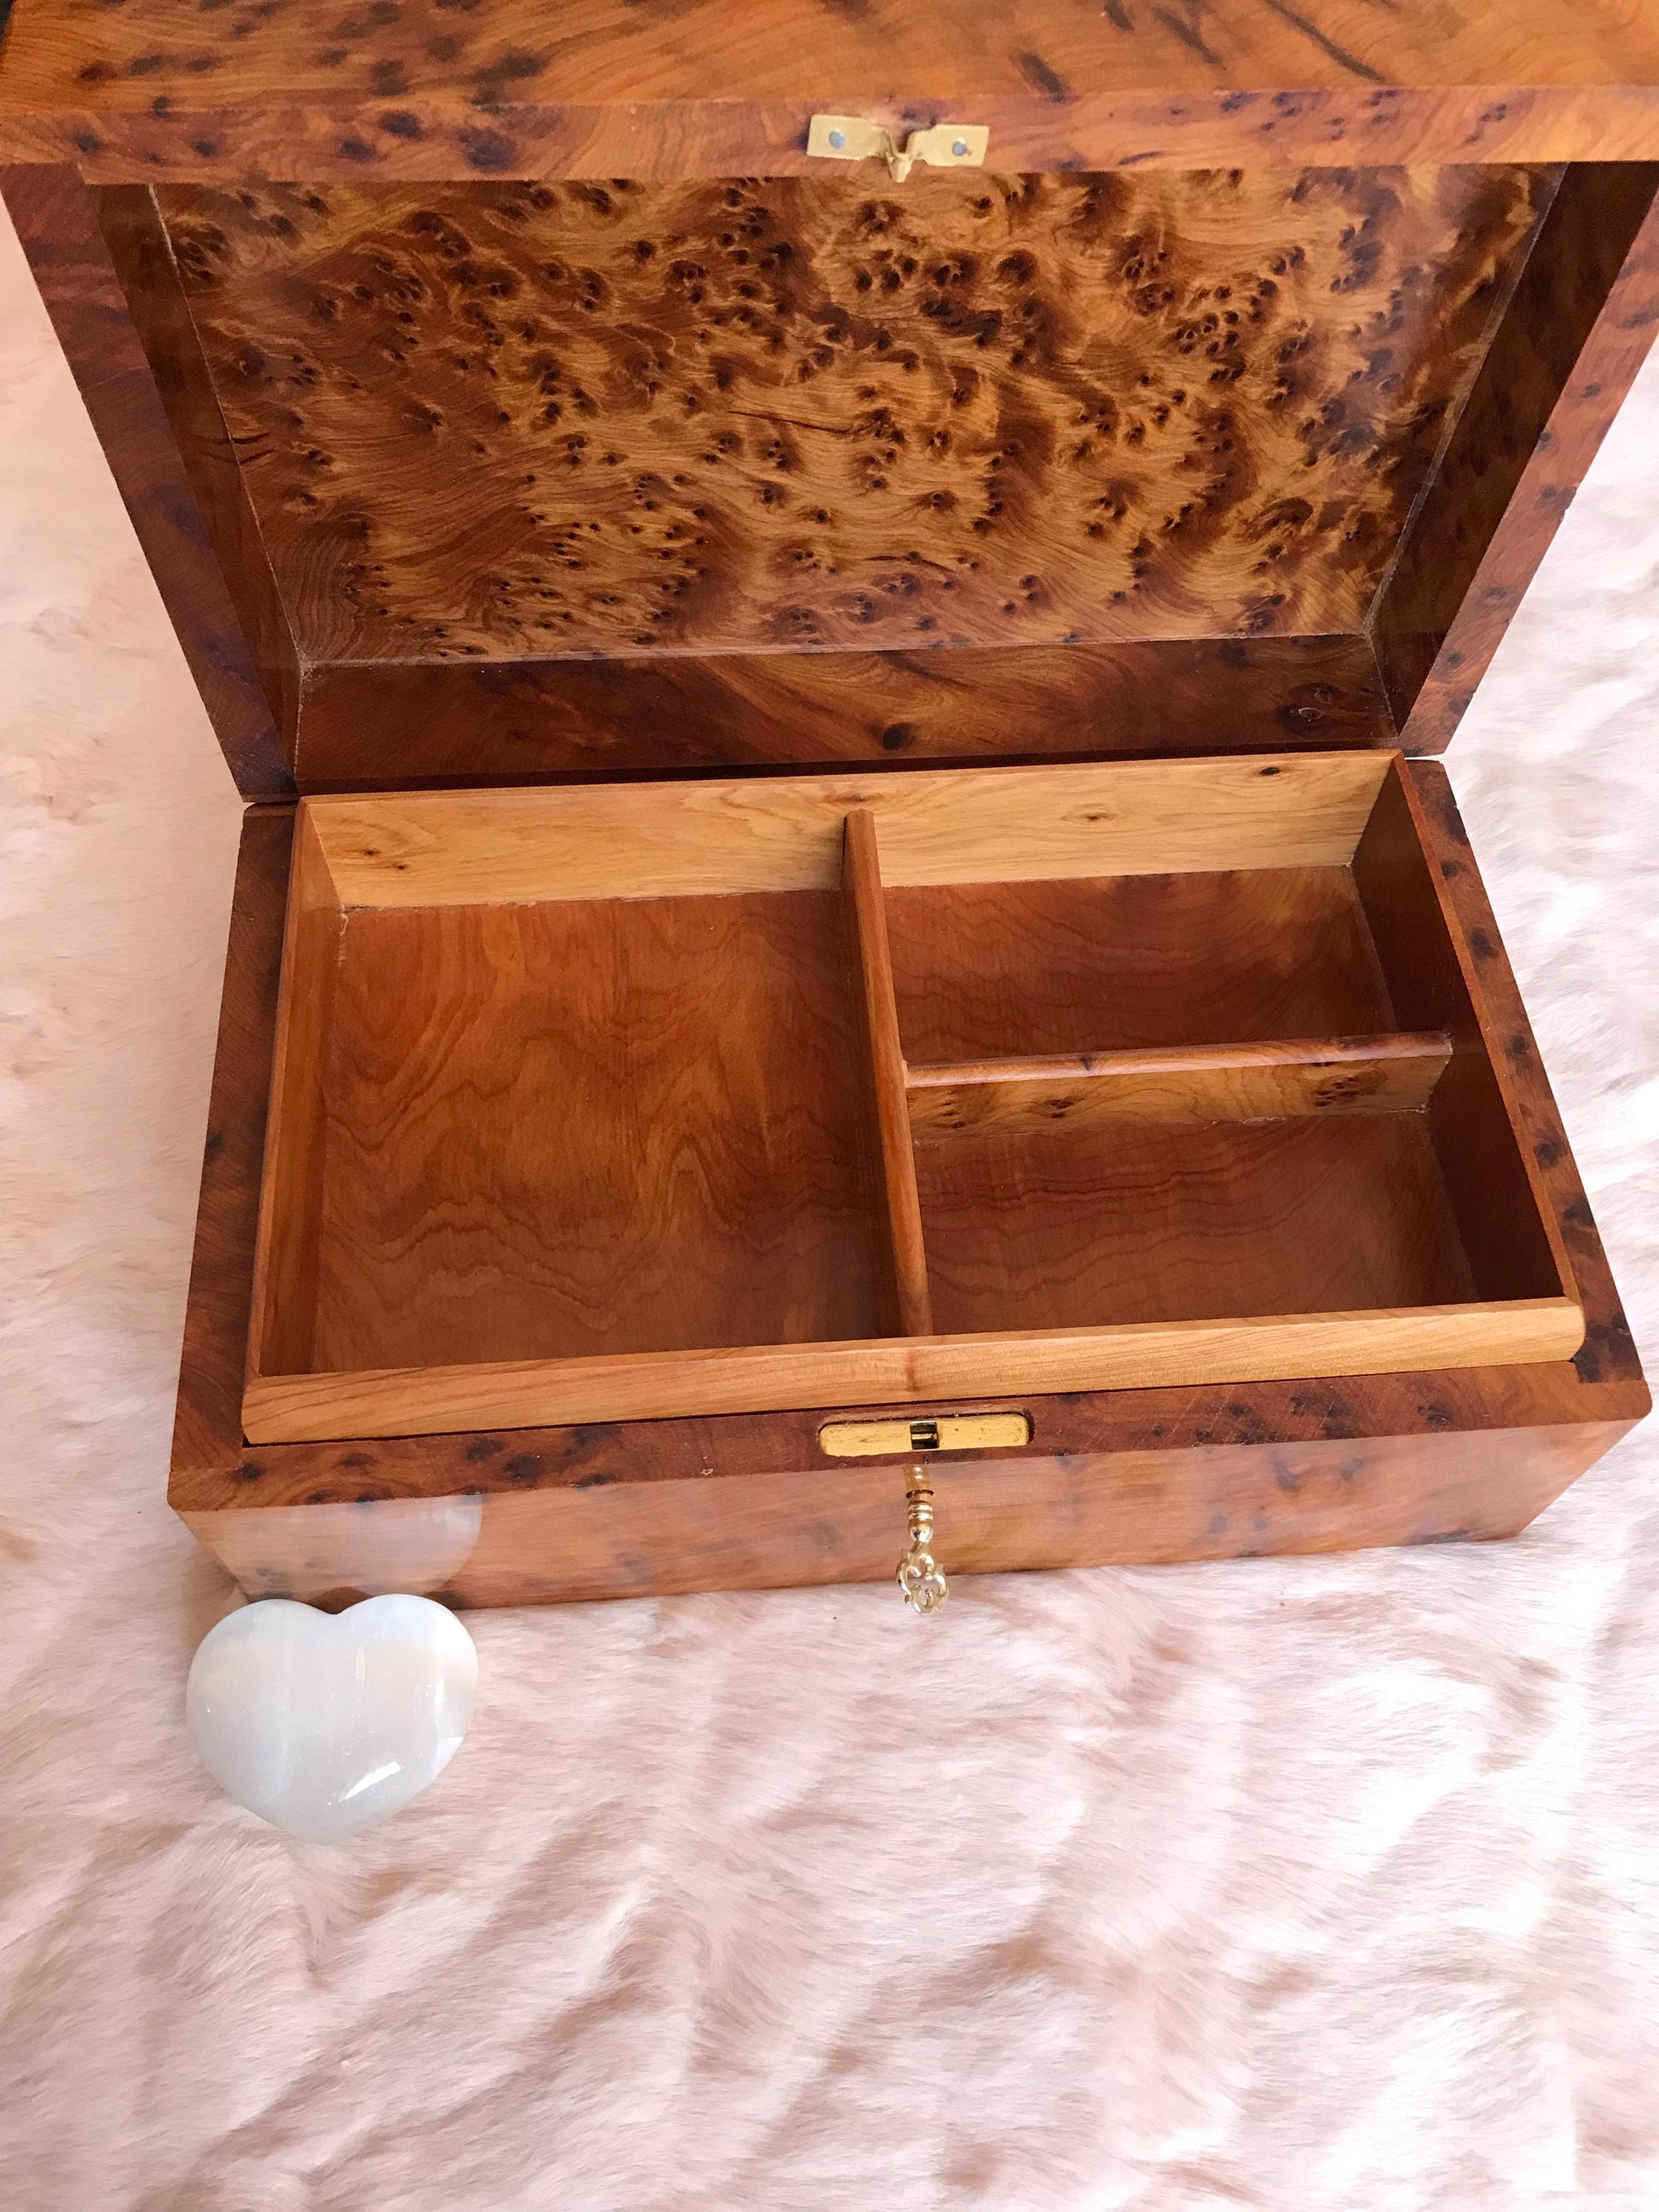 10"x6" Moroccan jewellery Box,large lockable thuya wooden burl Jewelry Box organizer with key,Christmas Couples gift,wedding wood memory box